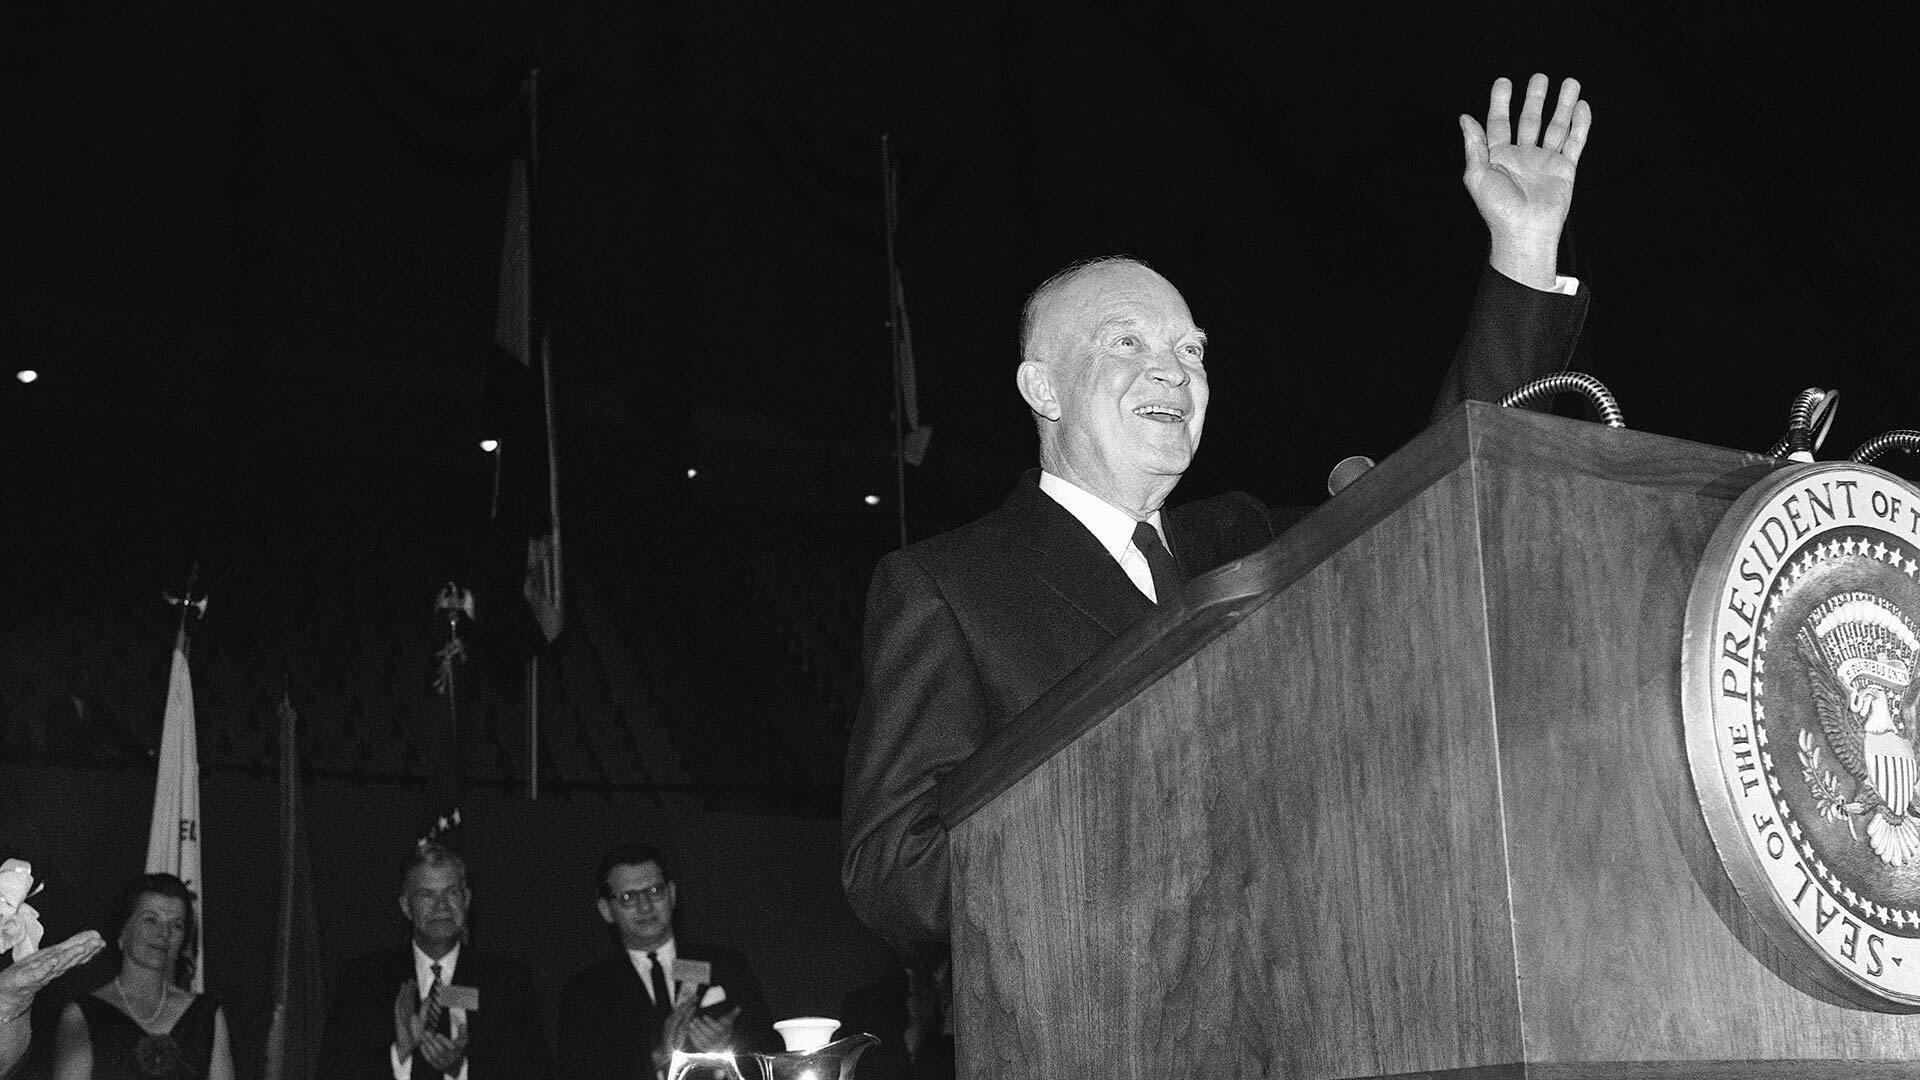 Eisenhower at podium